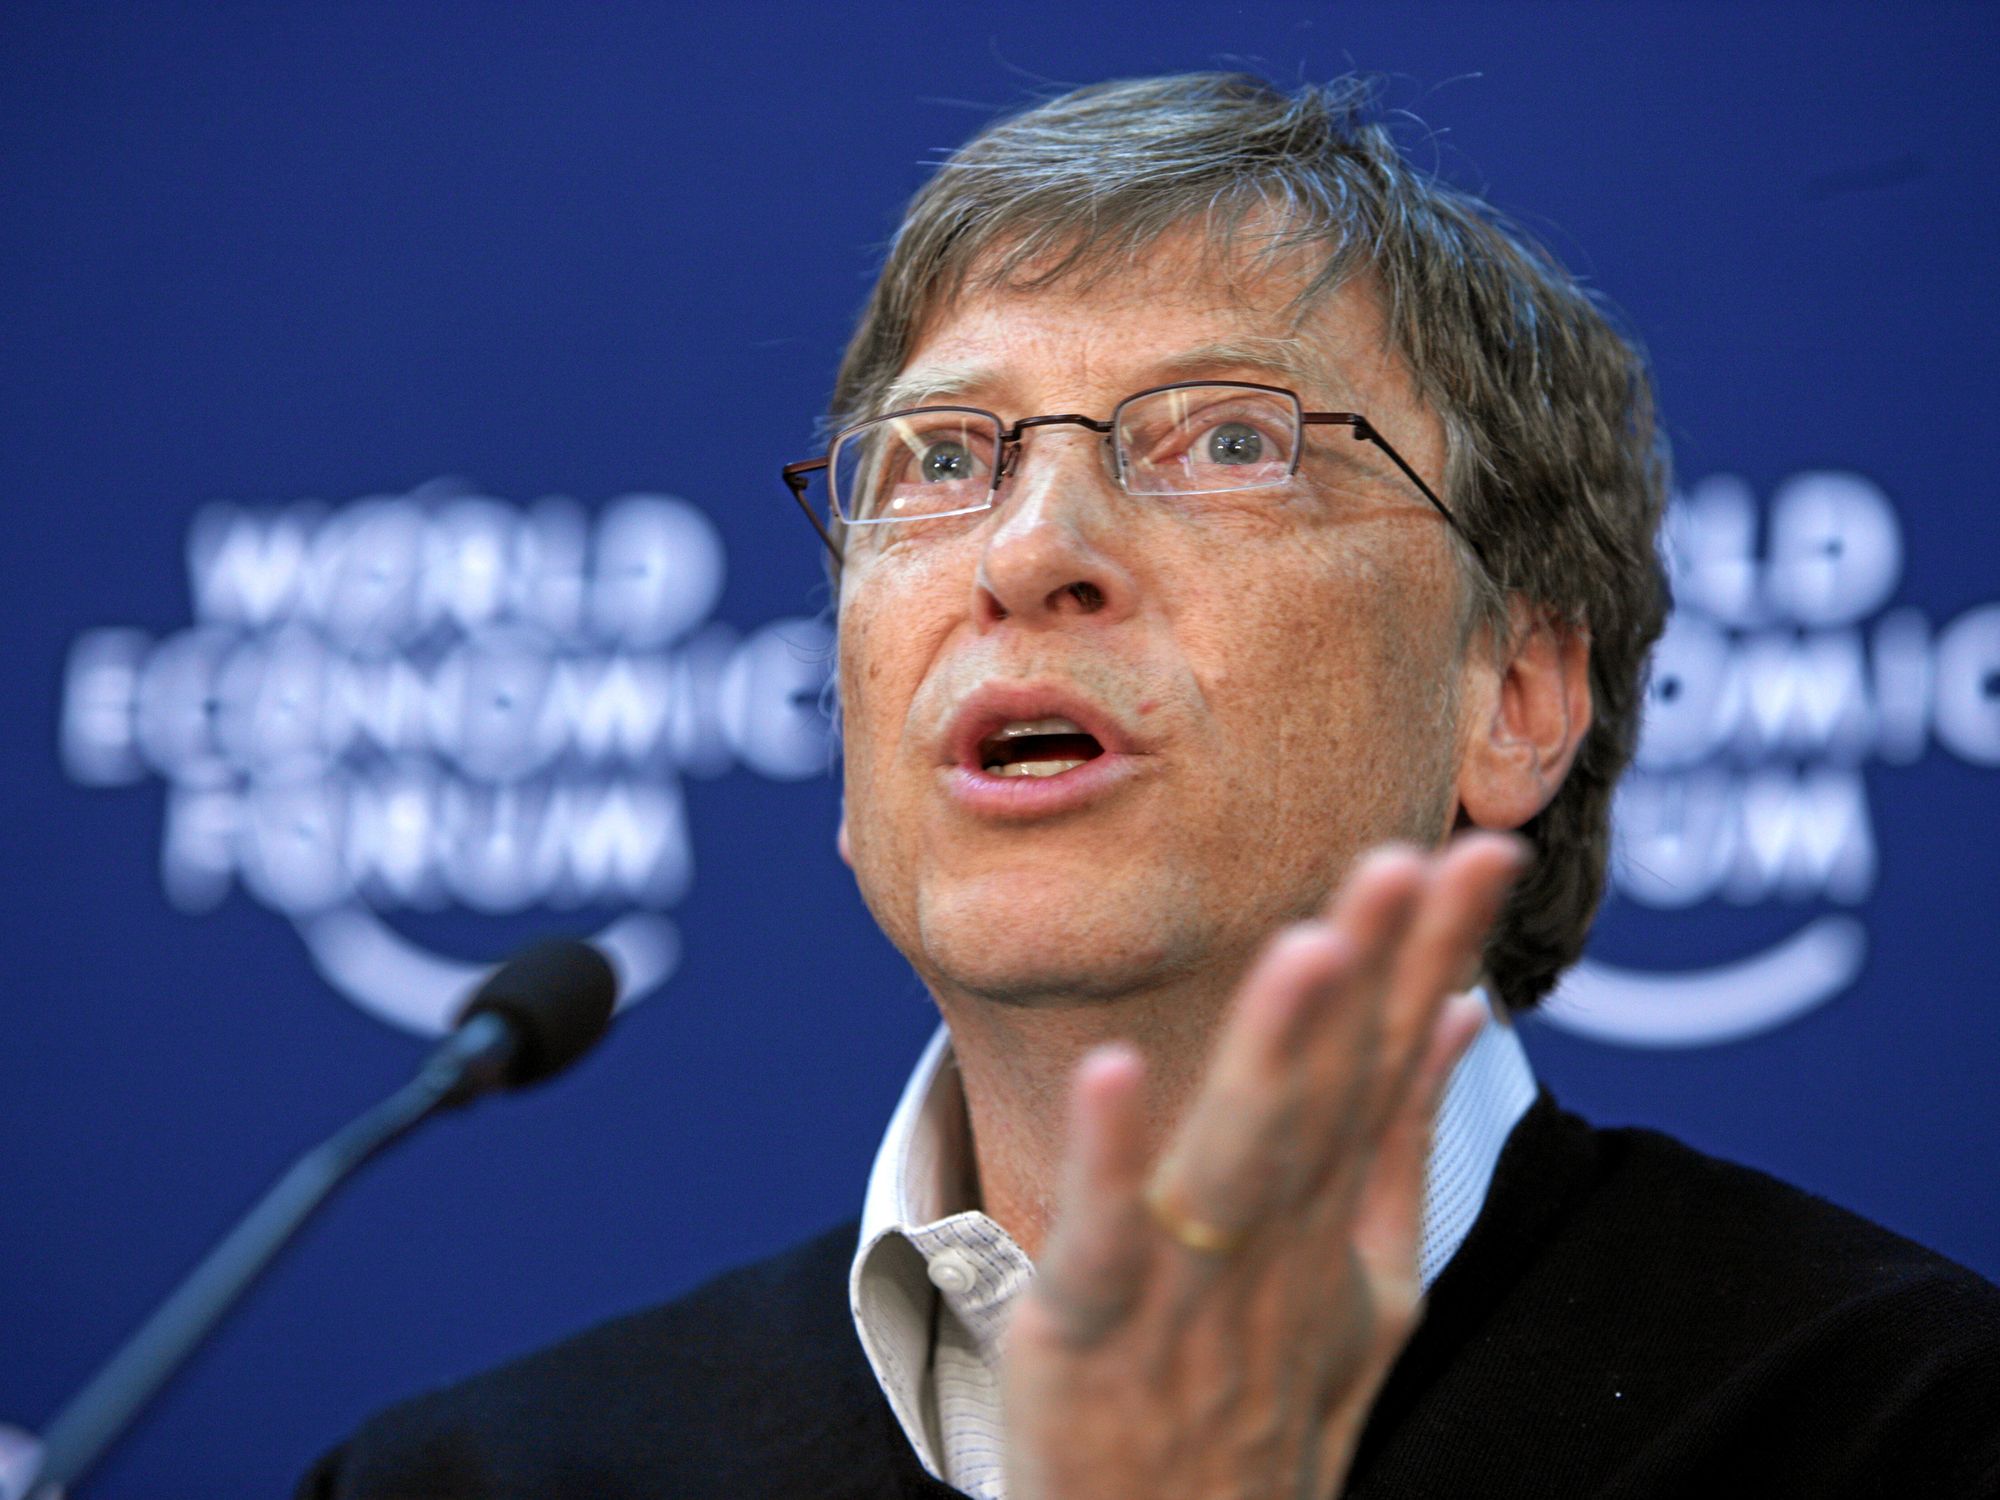 Bill Gates Warns That Coronavirus Impact Could Be ‘Very, Very Dramatic’